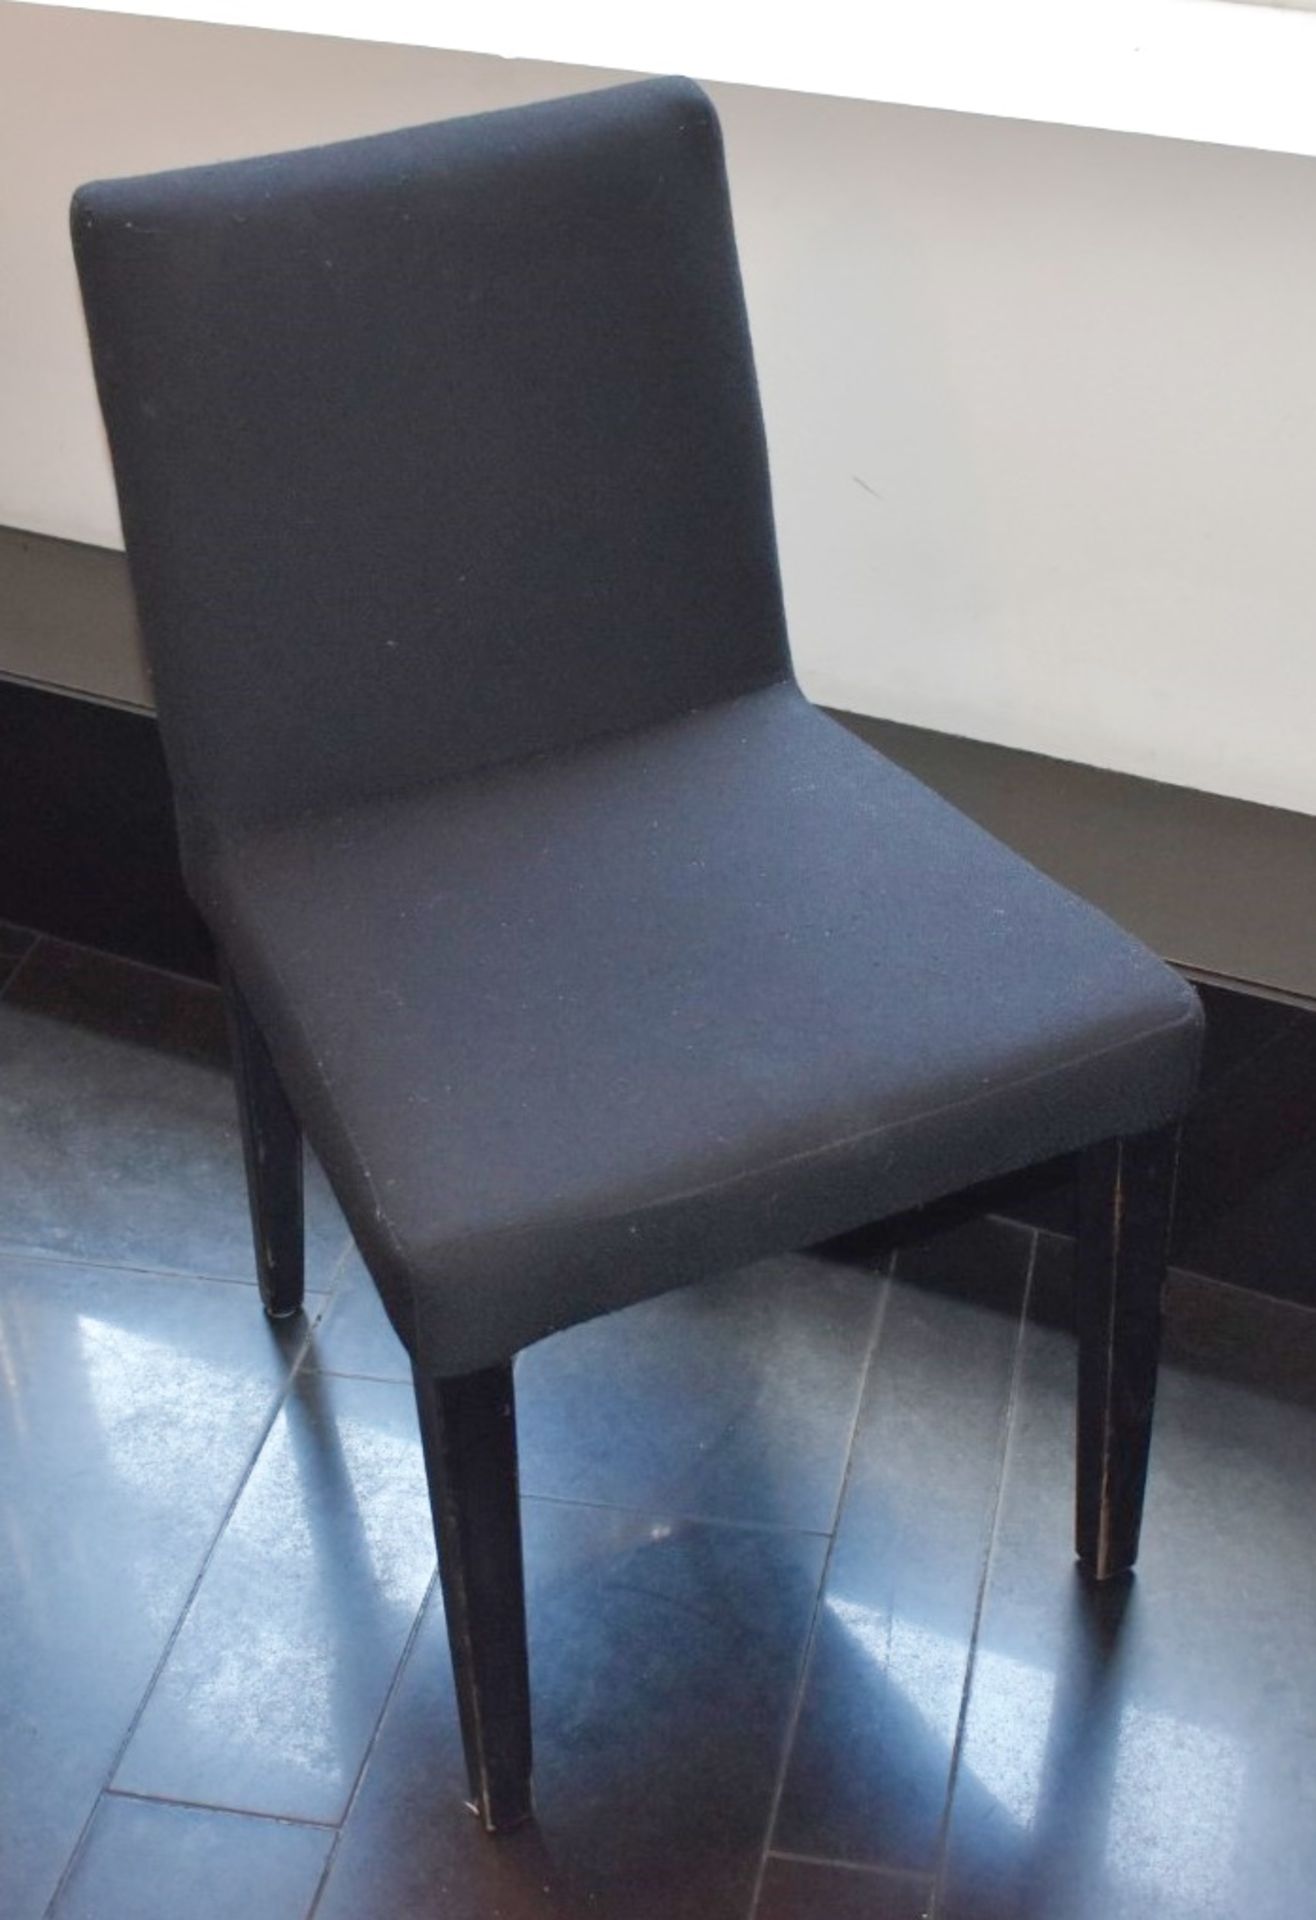 12 x Dark Grey Fabric Restaurant Dining Chairs - Dimensions: H84 x W45 x D52cm - CL392 - Ref LD144